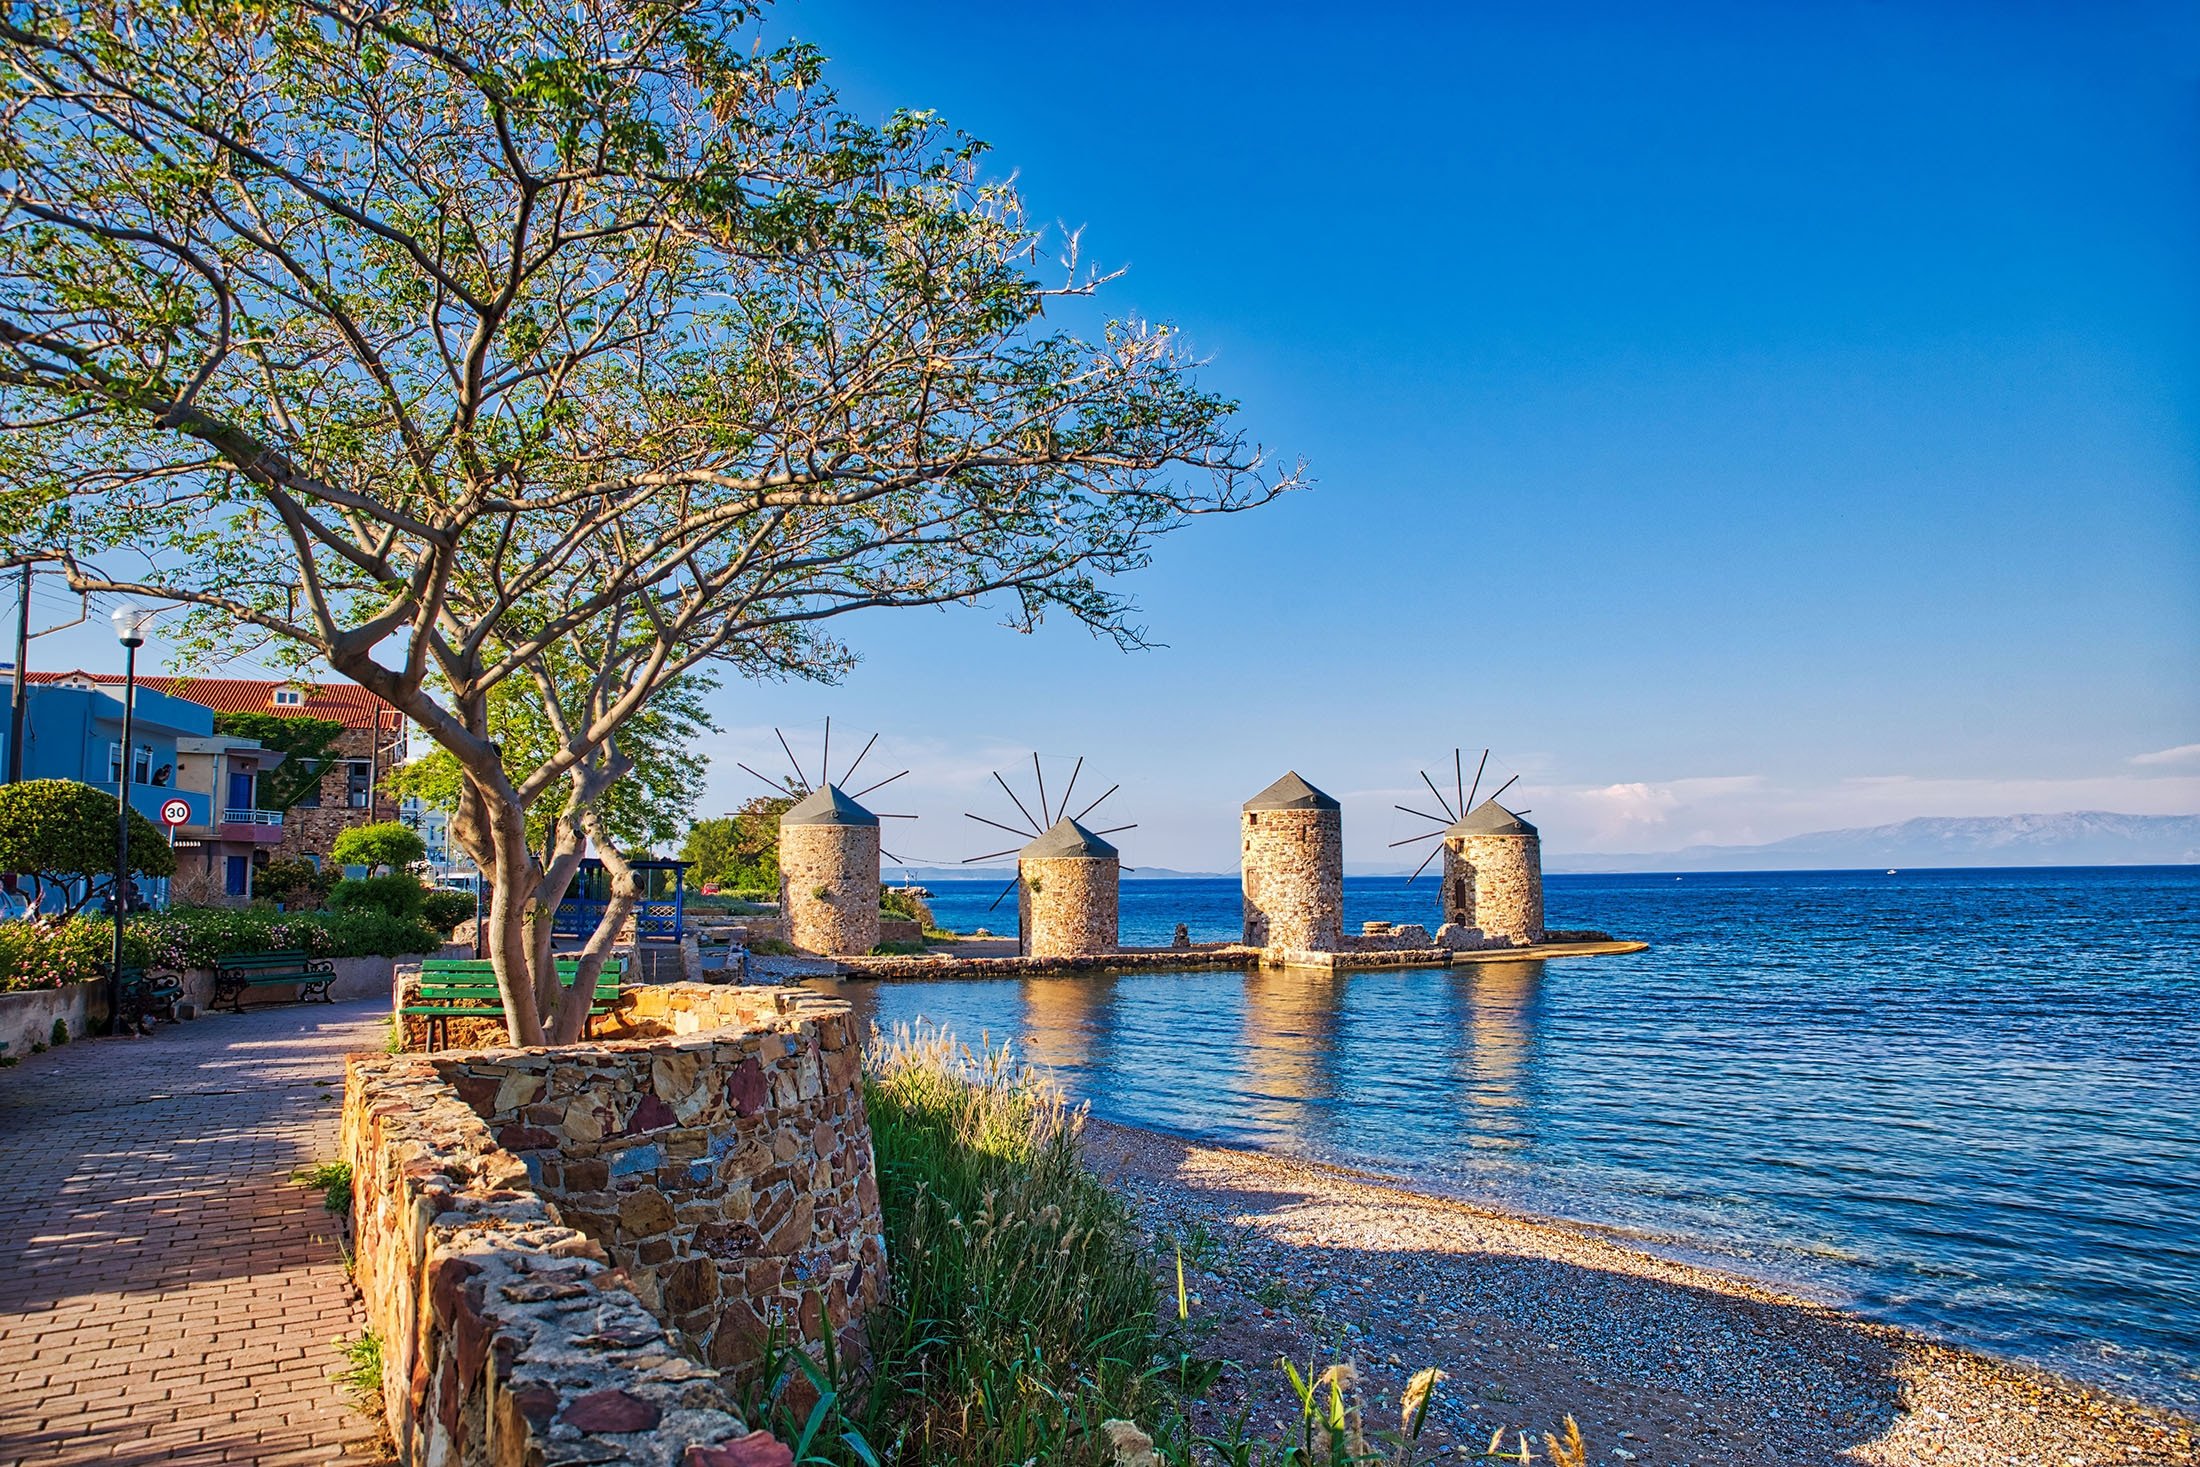 Chios Island Greece